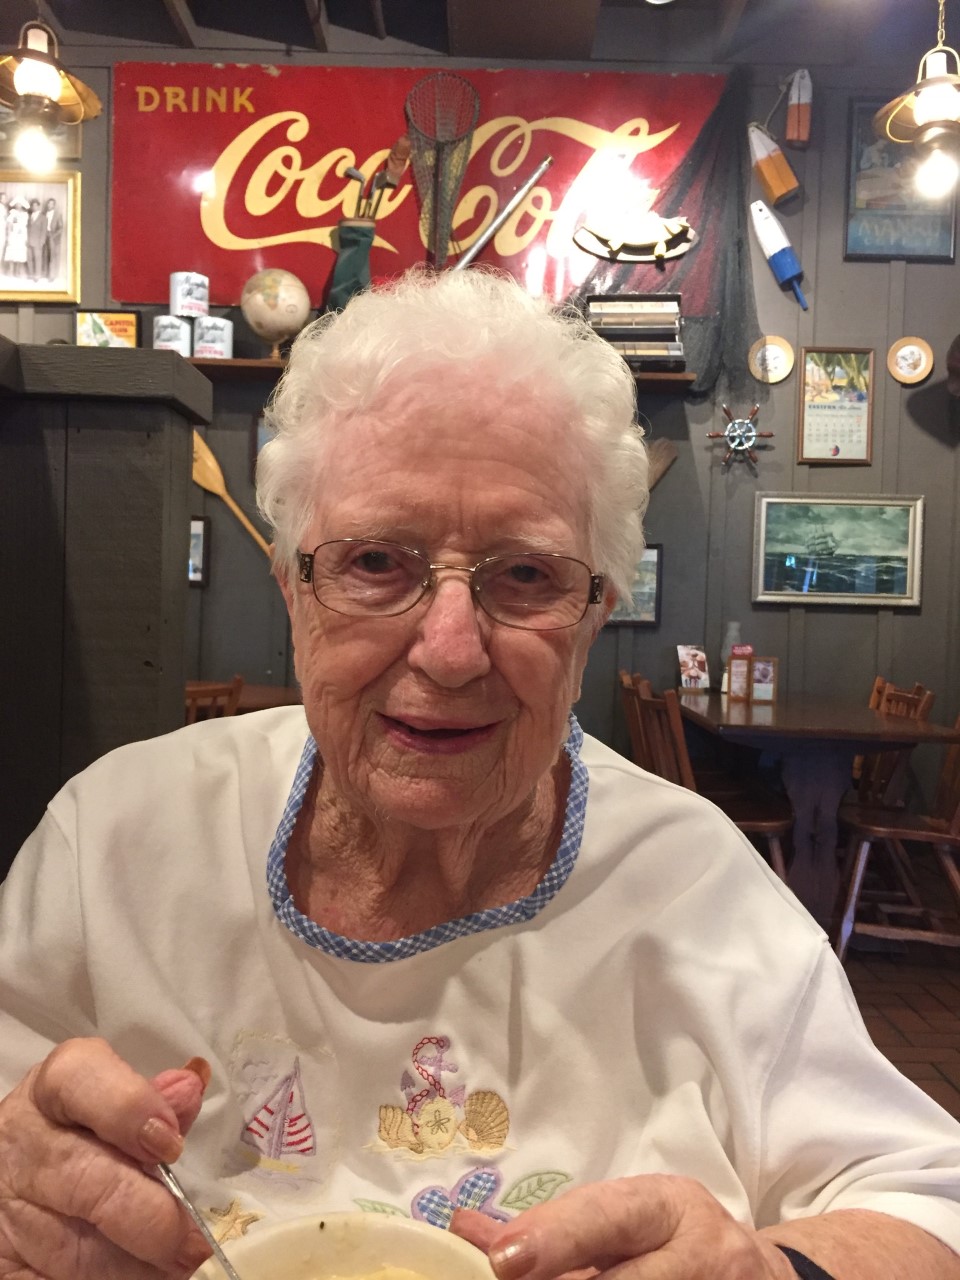 Grandma's Briefs — Grilled Grandma profiles — Grilled Grandma: Grandma  Marianne